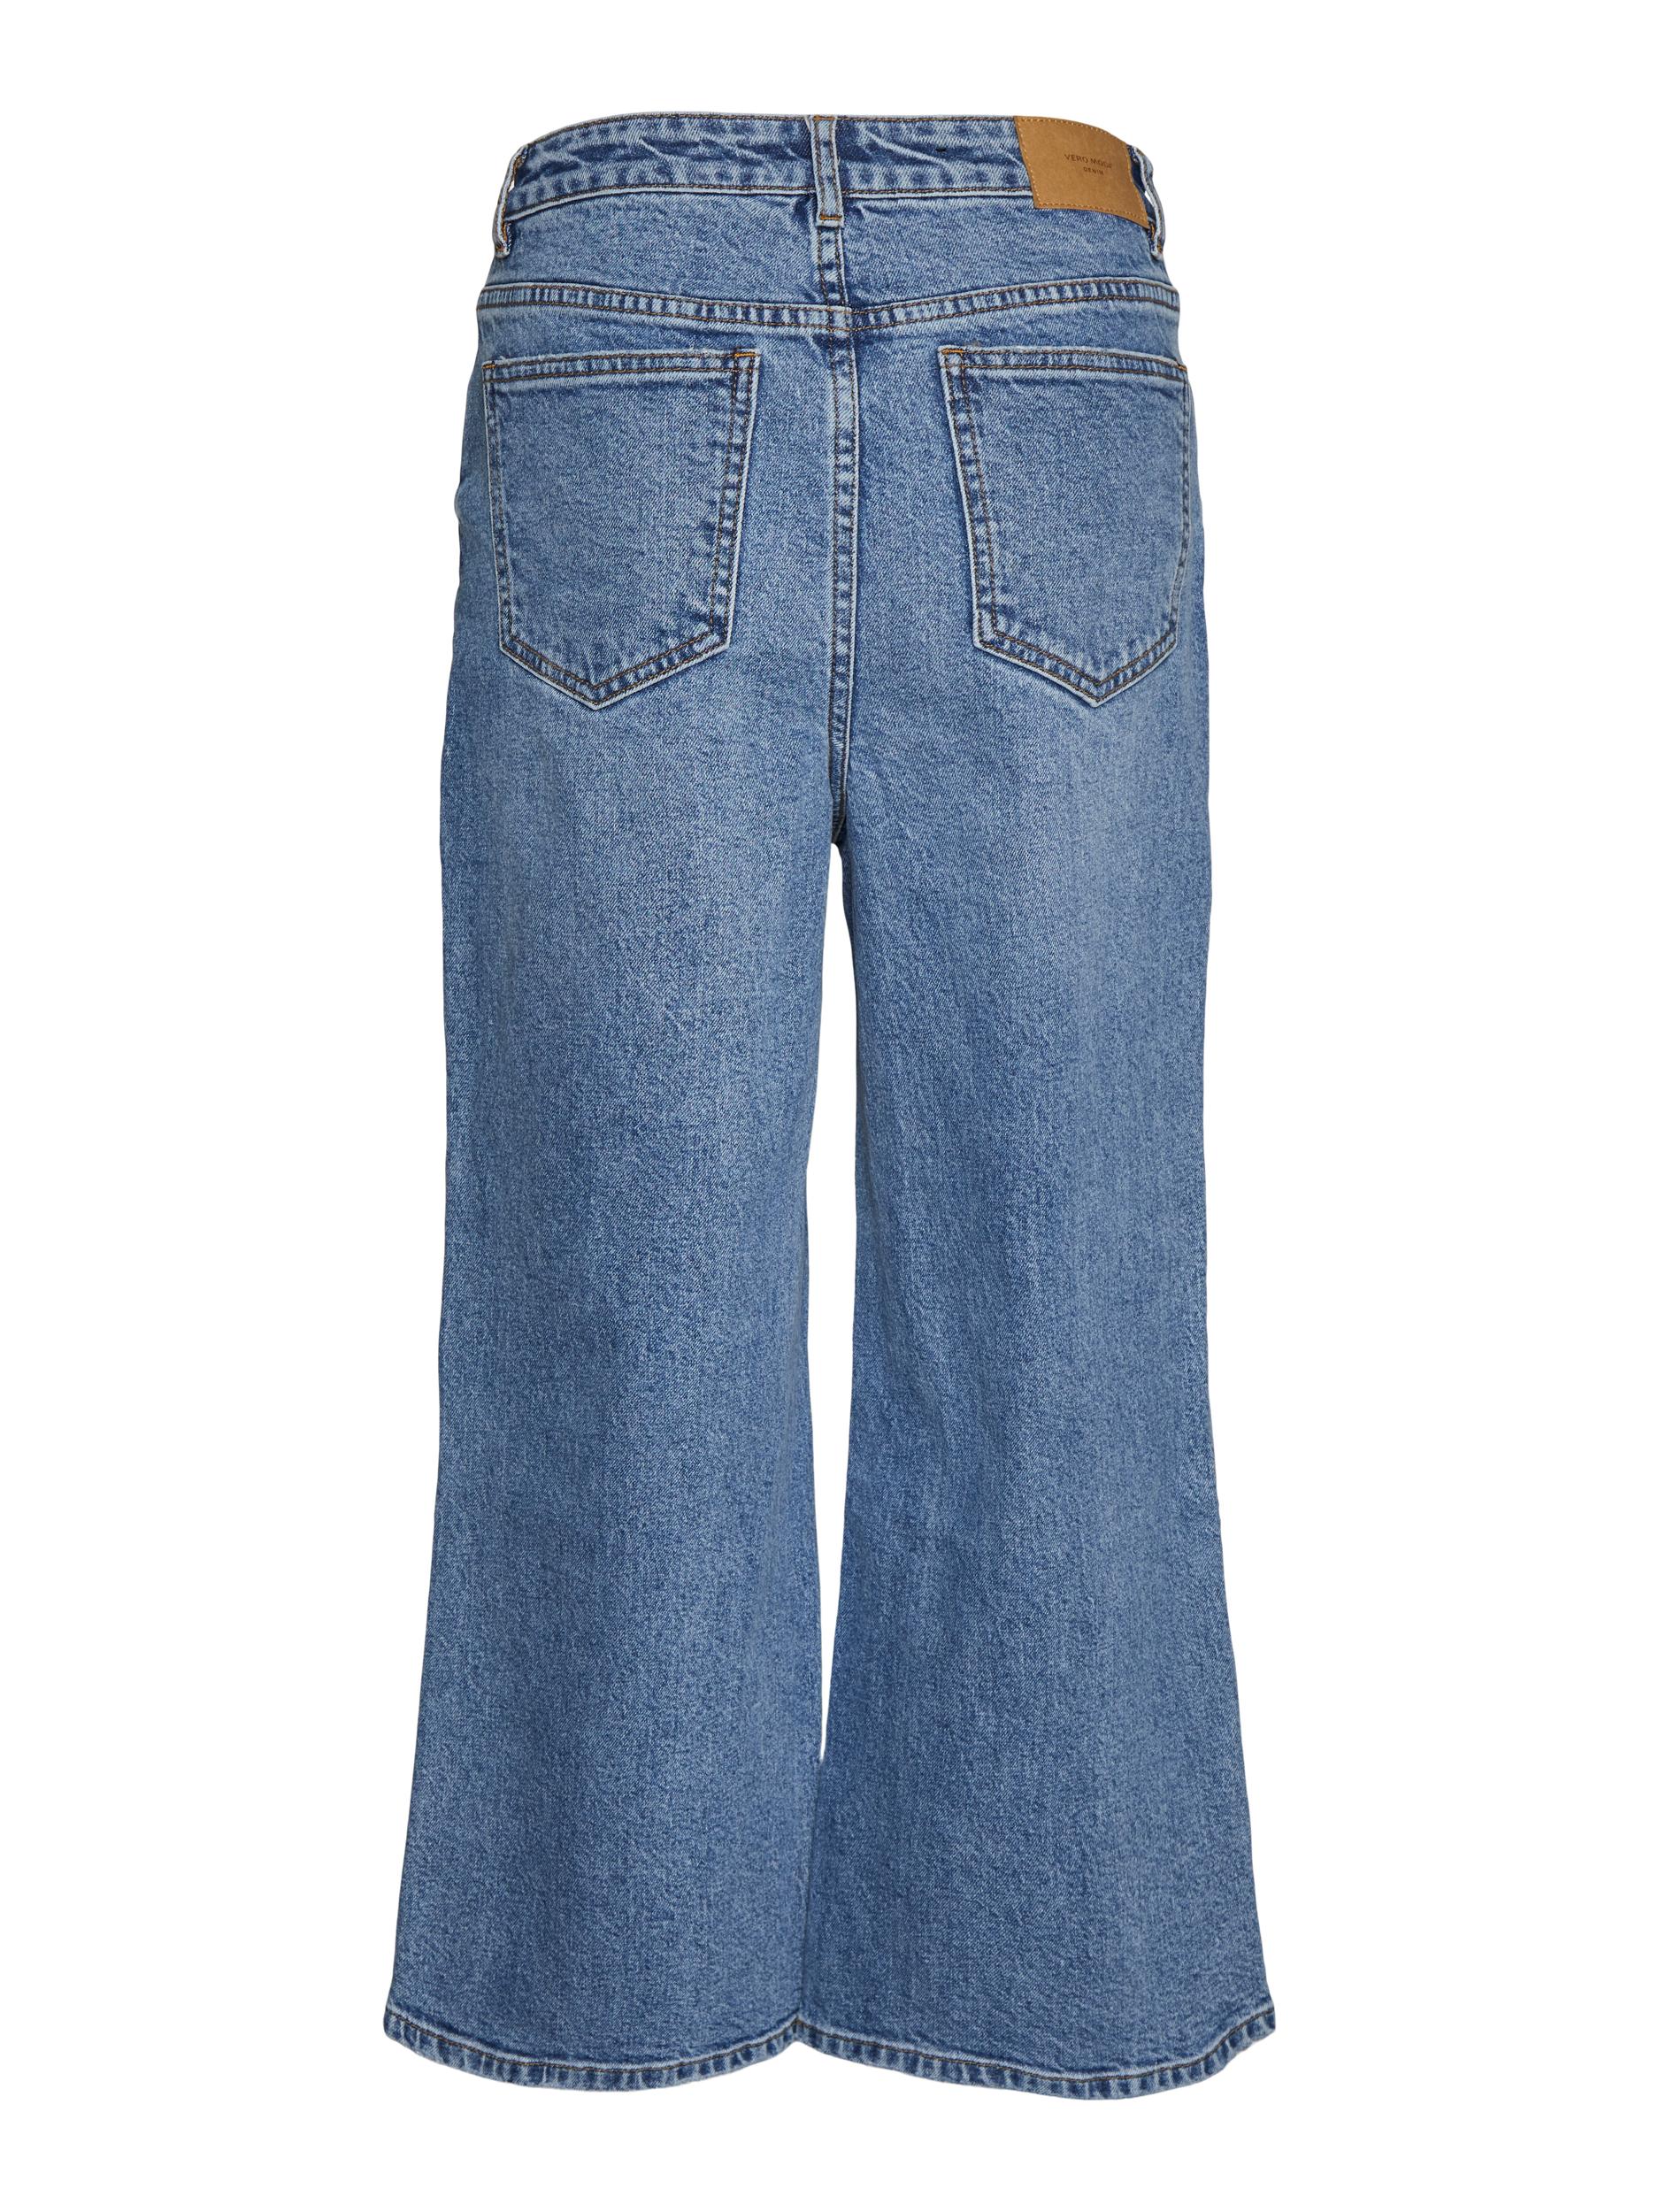 Vero Moda Kathy Jeans, Light Blue Denim, W31/L34